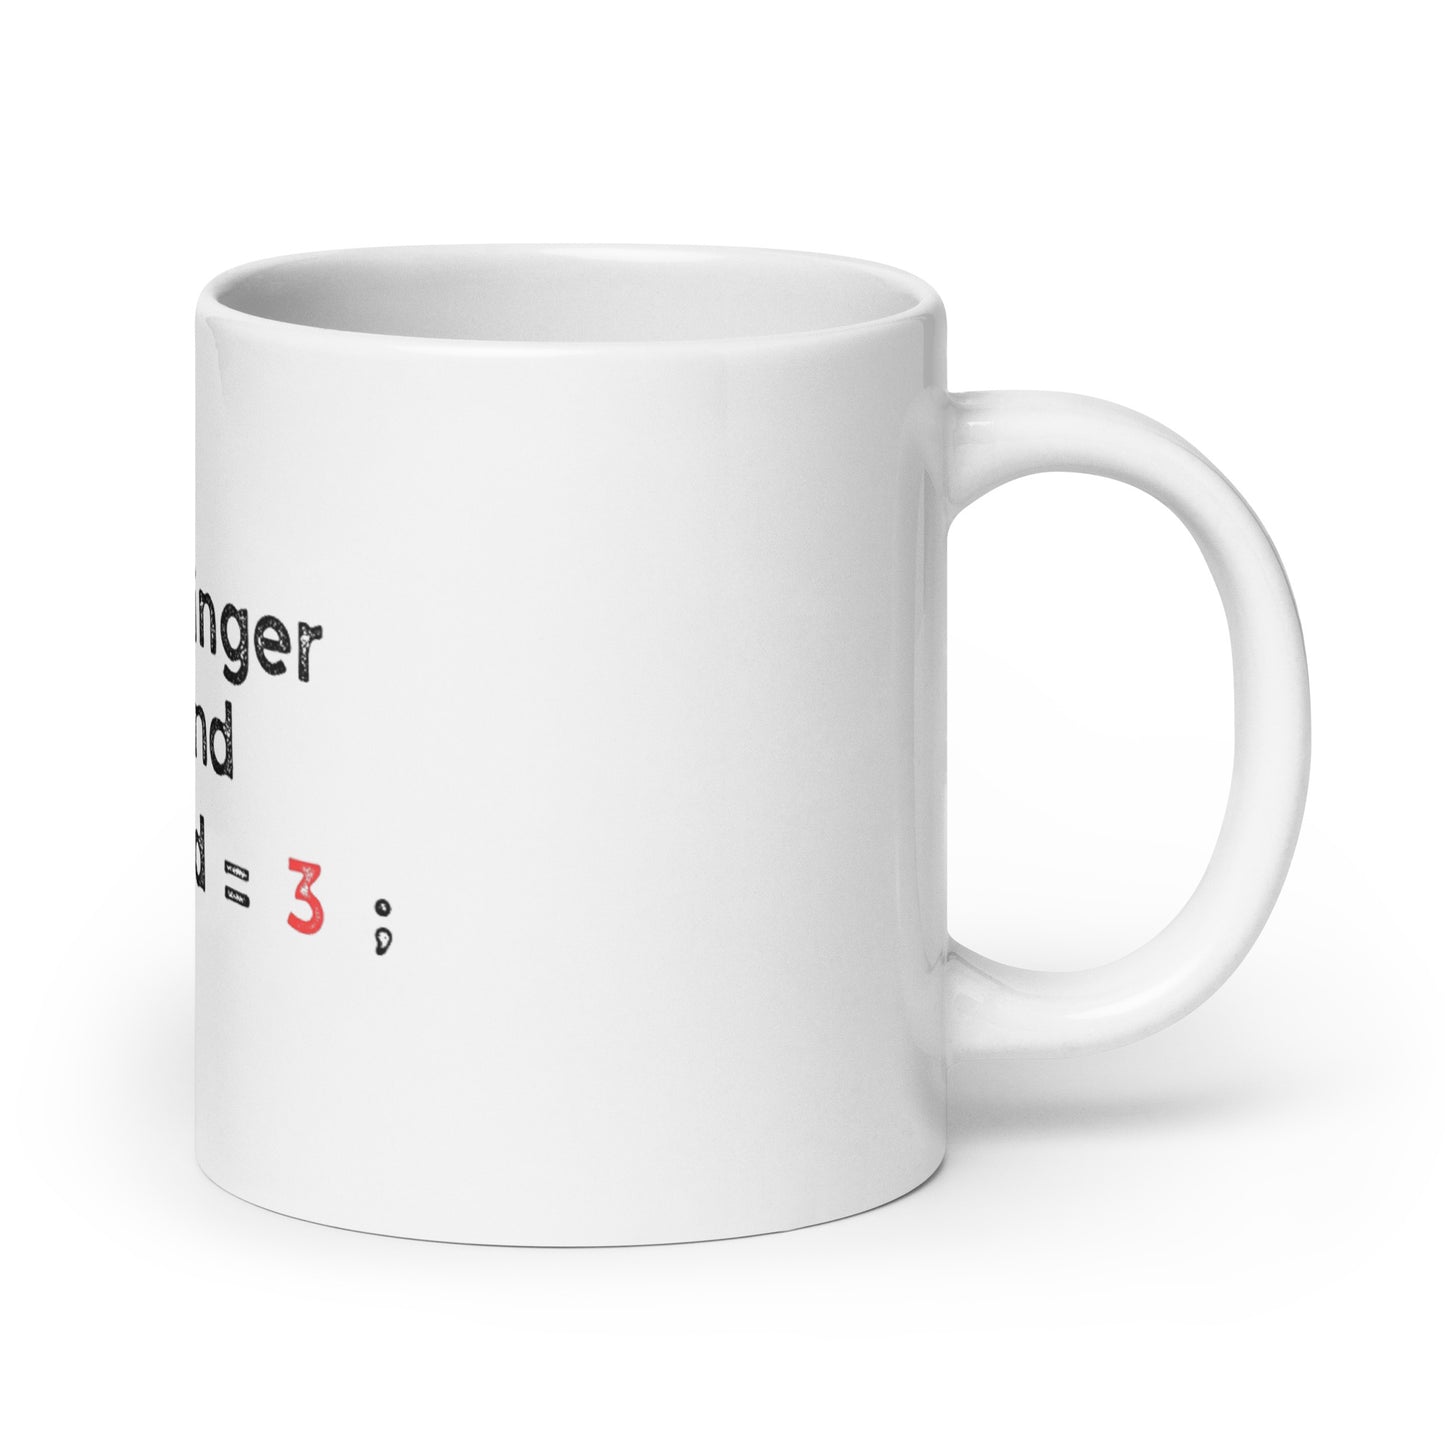 Select Finger glossy mug